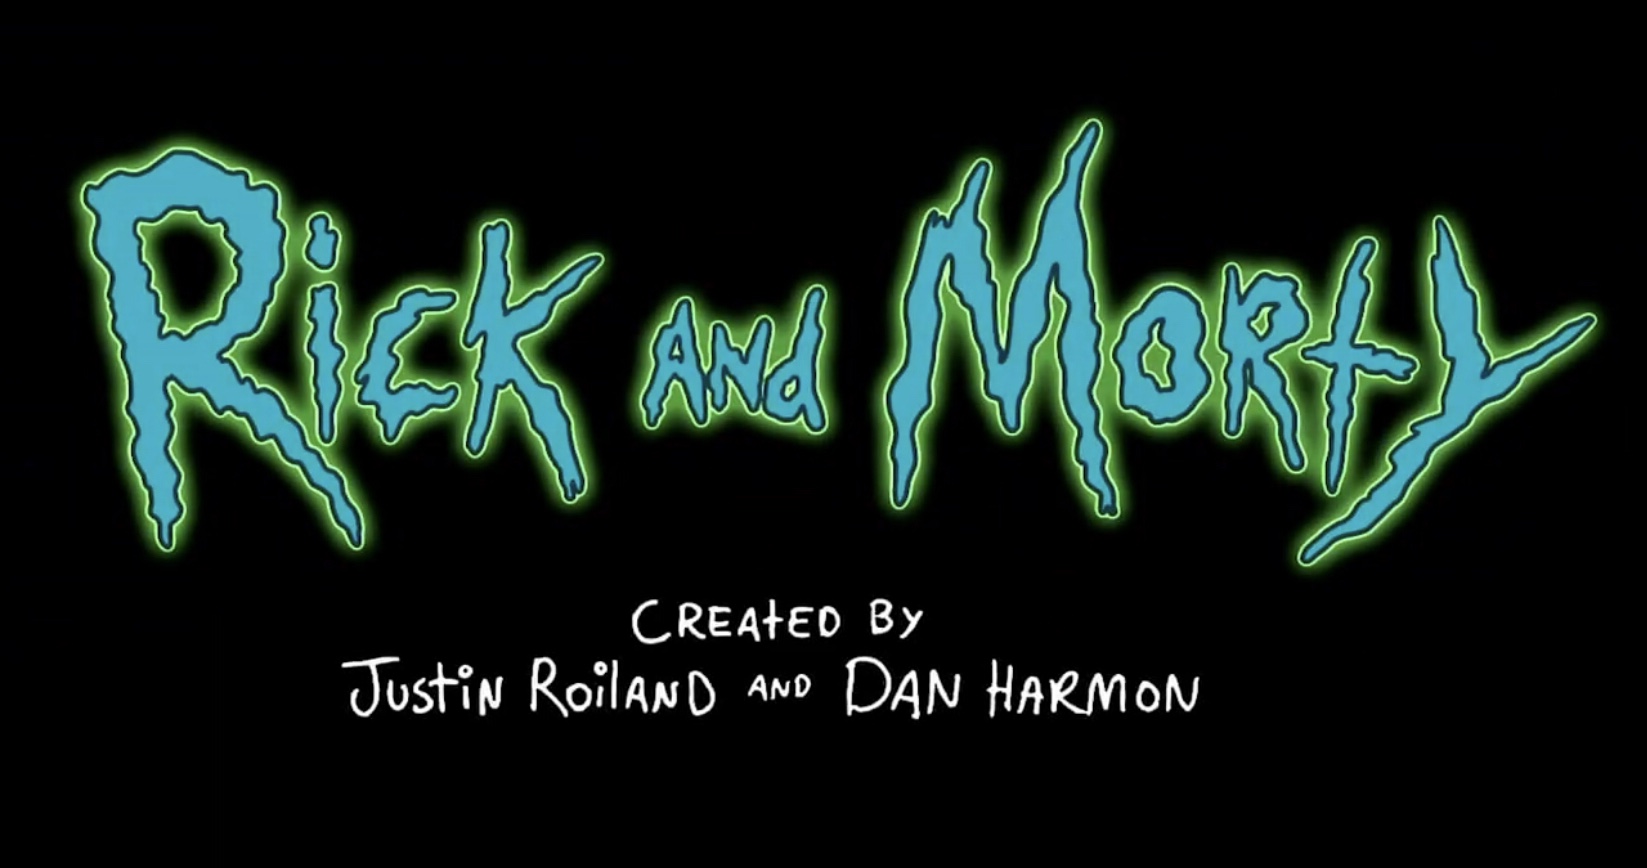 Rick and morty logo.jpeg